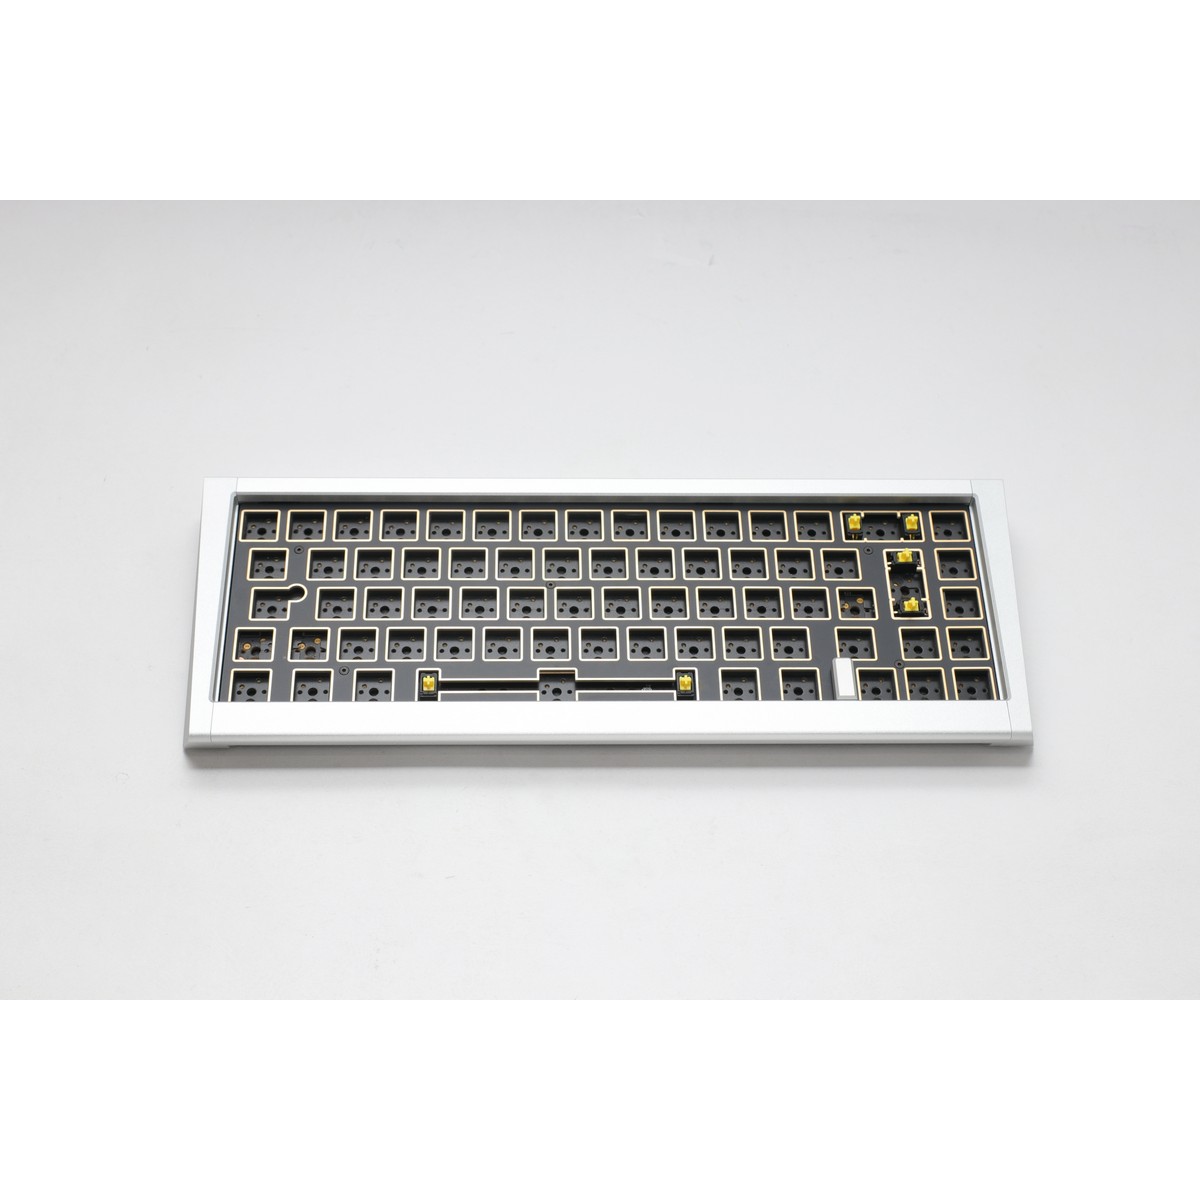 Ducky - Ducky ProjectD Outlaw65 Barebone Custom Keyboard - Silver (First Edition)